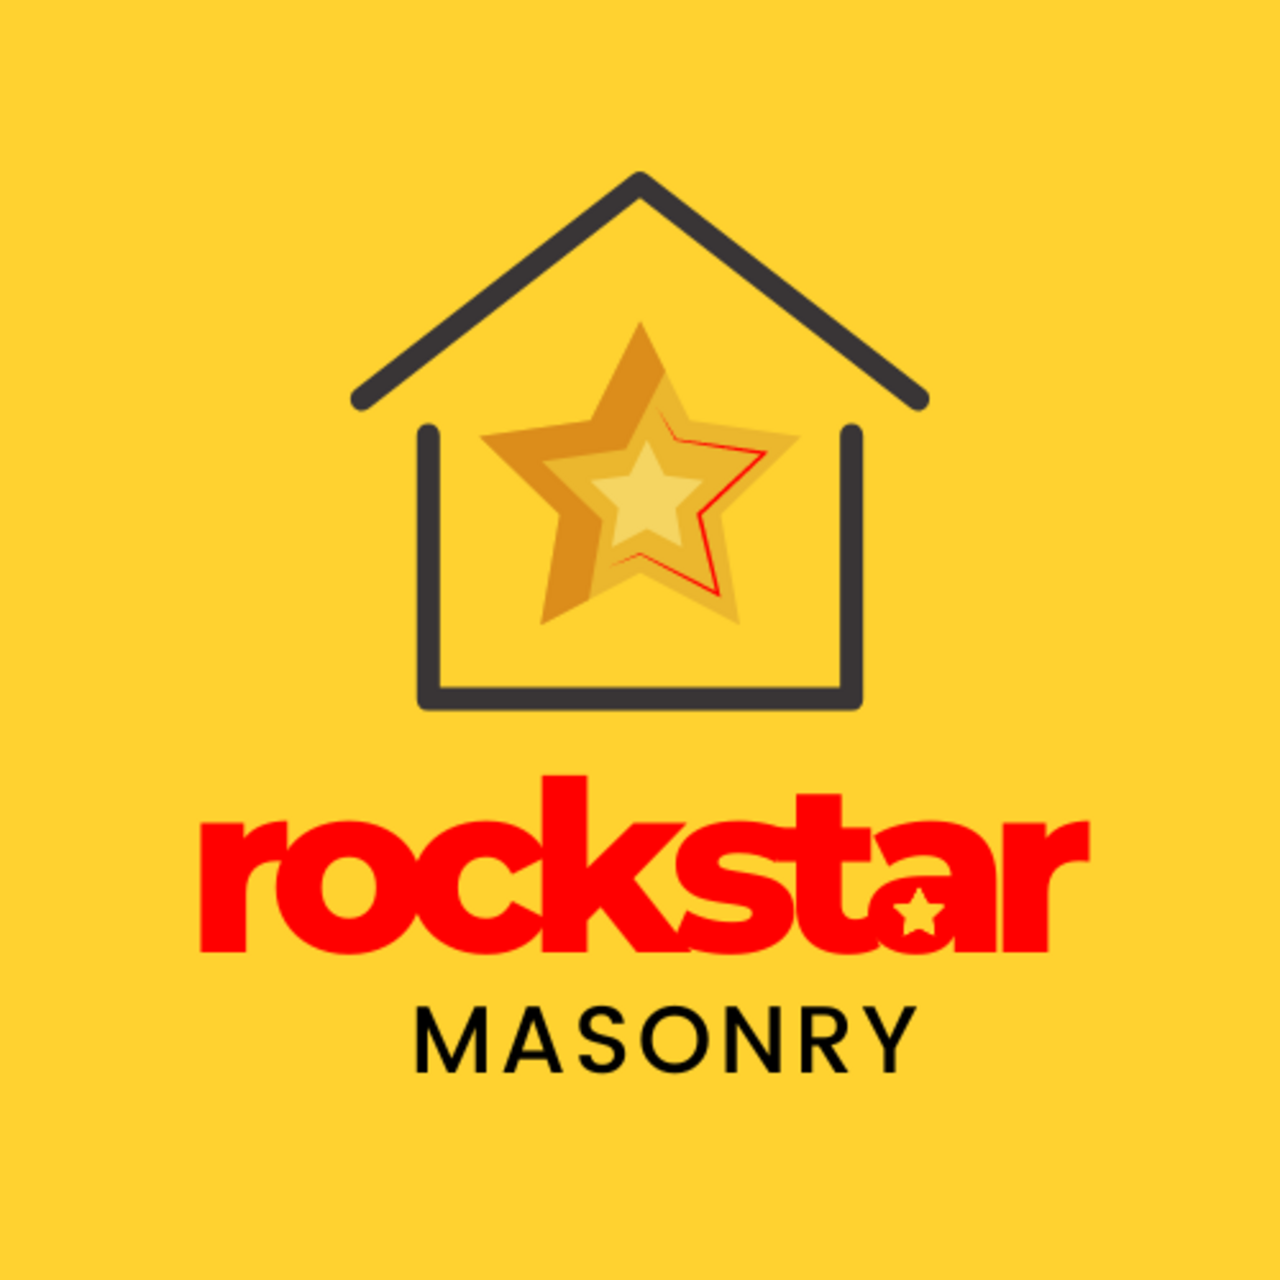 Rockstar Masonry 's logo